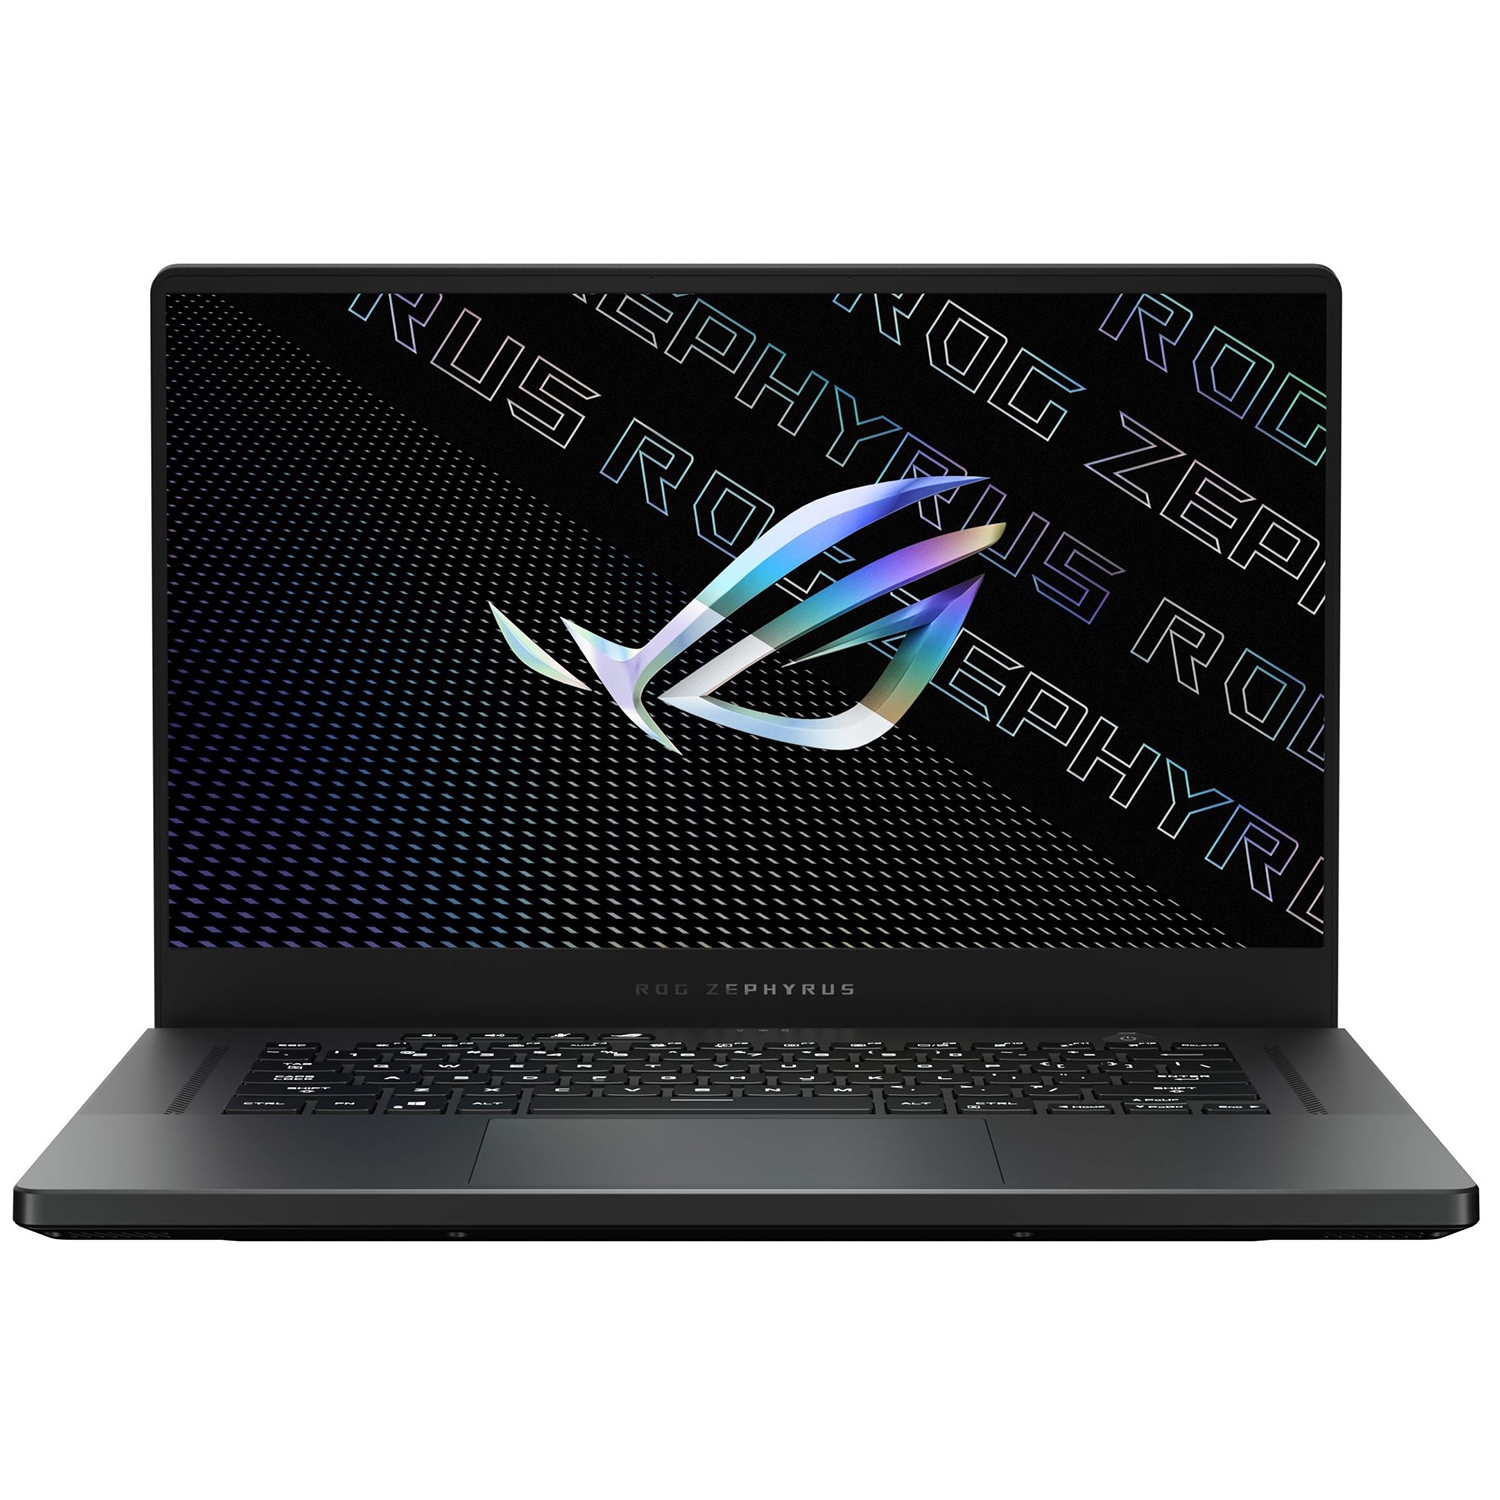 Custom ASUS ROG Zephyrus G15 Laptop (AMD Ryzen 9 5900HS, 8GB RAM, 1TB PCIe SSD, NVIDIA RTX 3060, Win 10 Home)